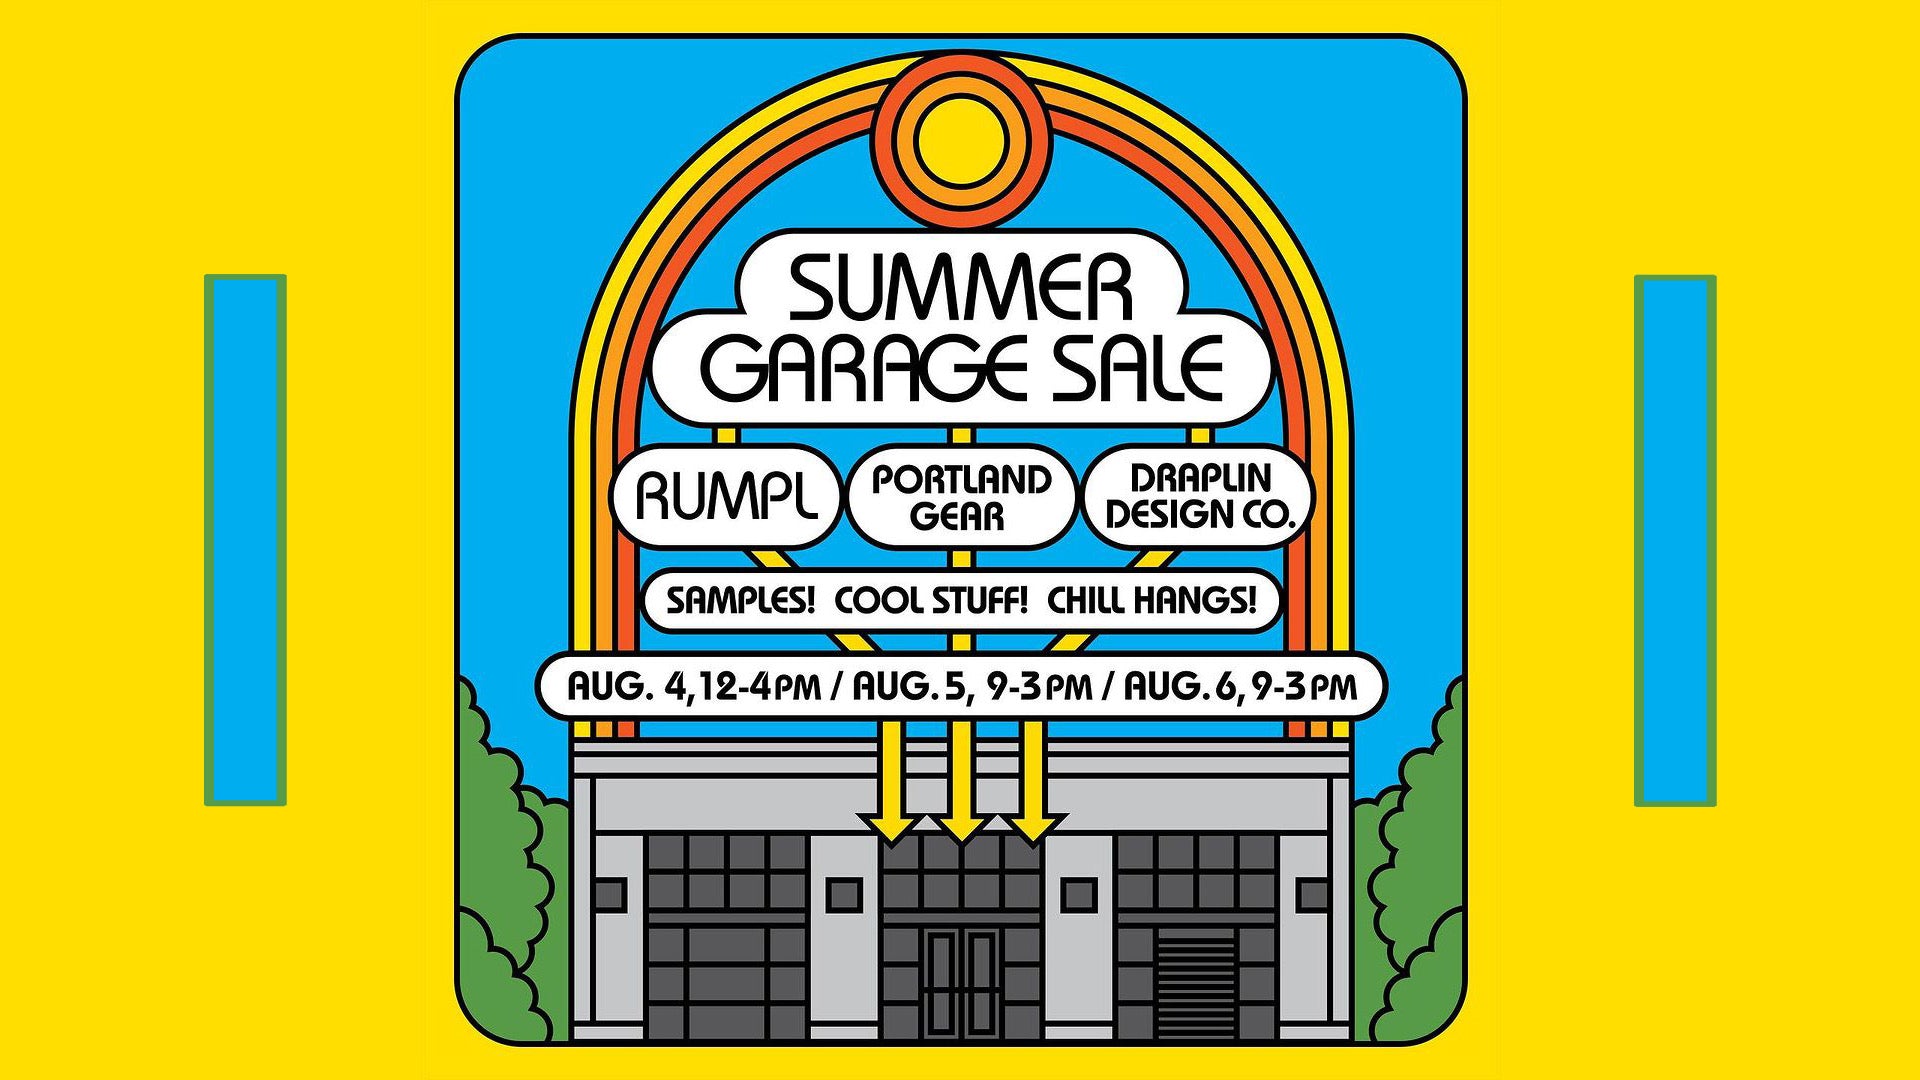 Portland's Premier Brands Unite - Summer Garage Sale